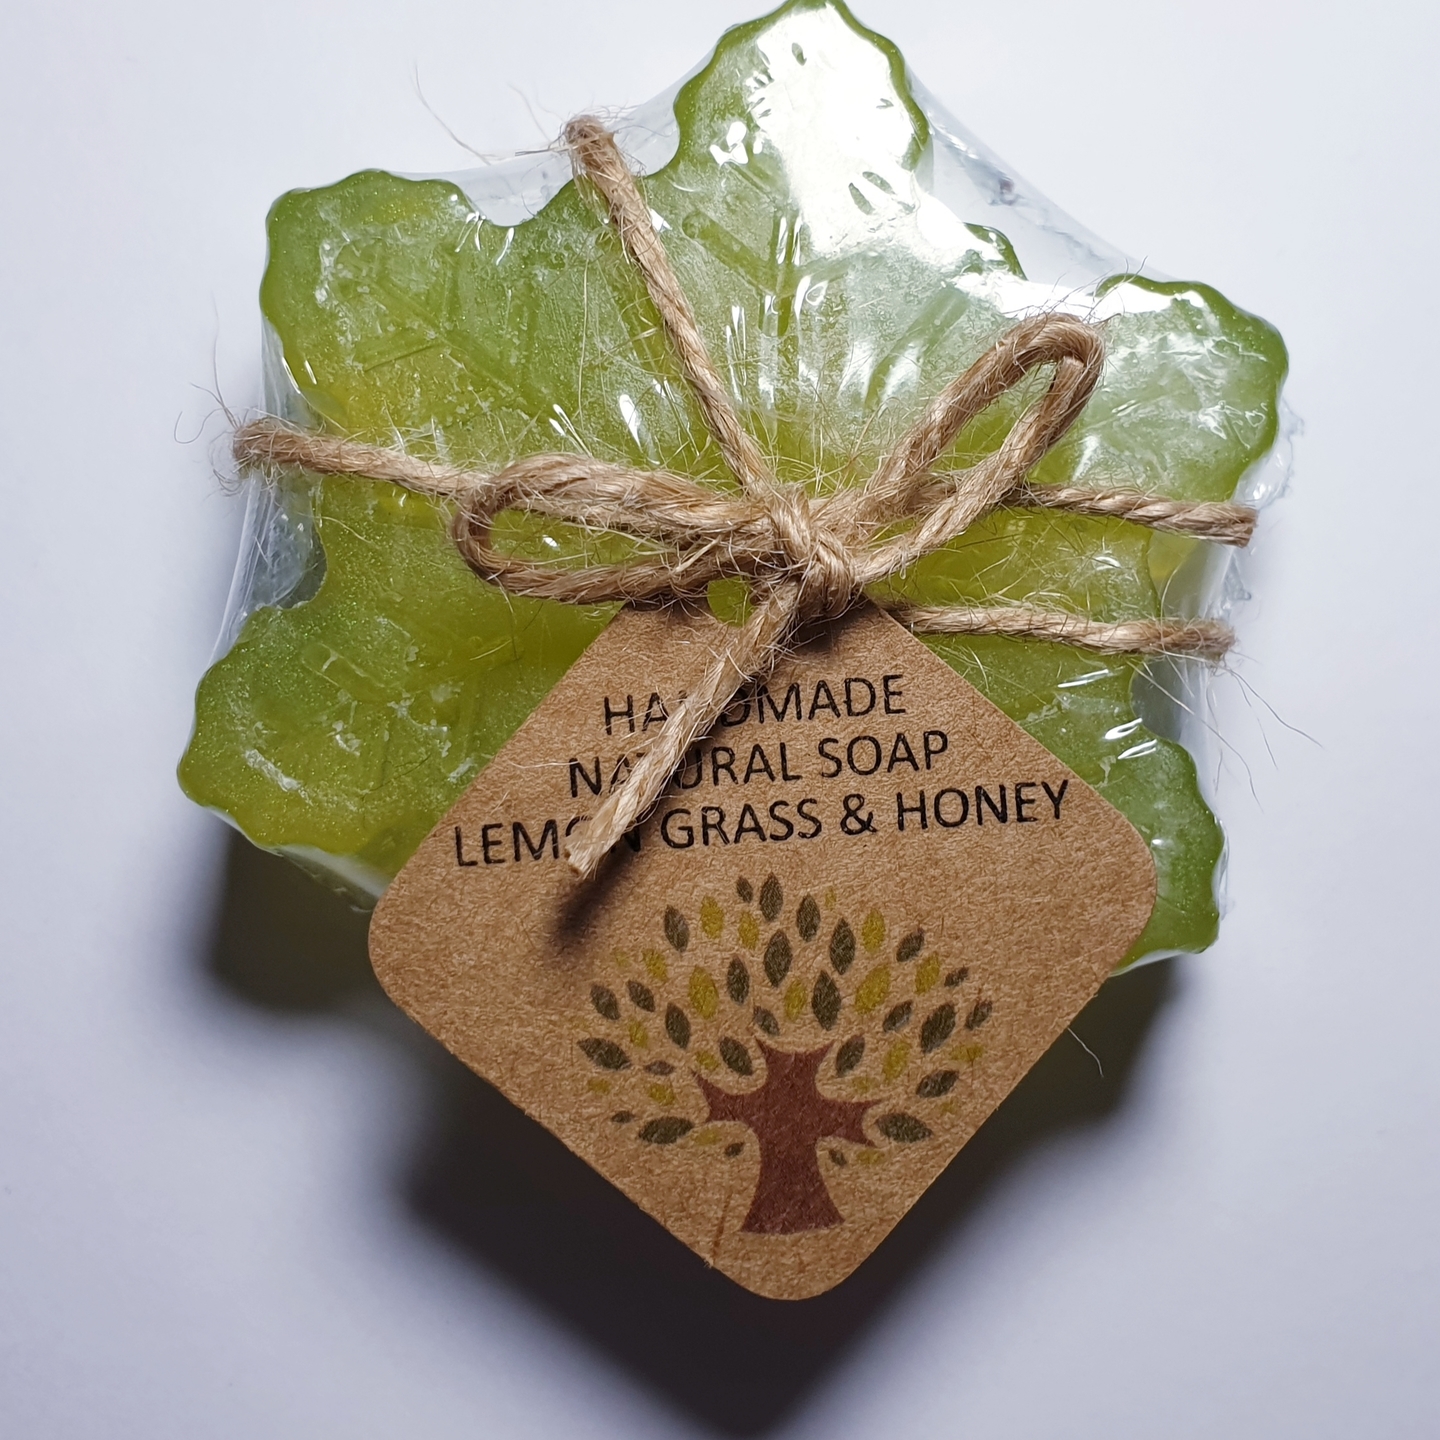 Handmade Natural Soap Snowflakes, Lemon Grass